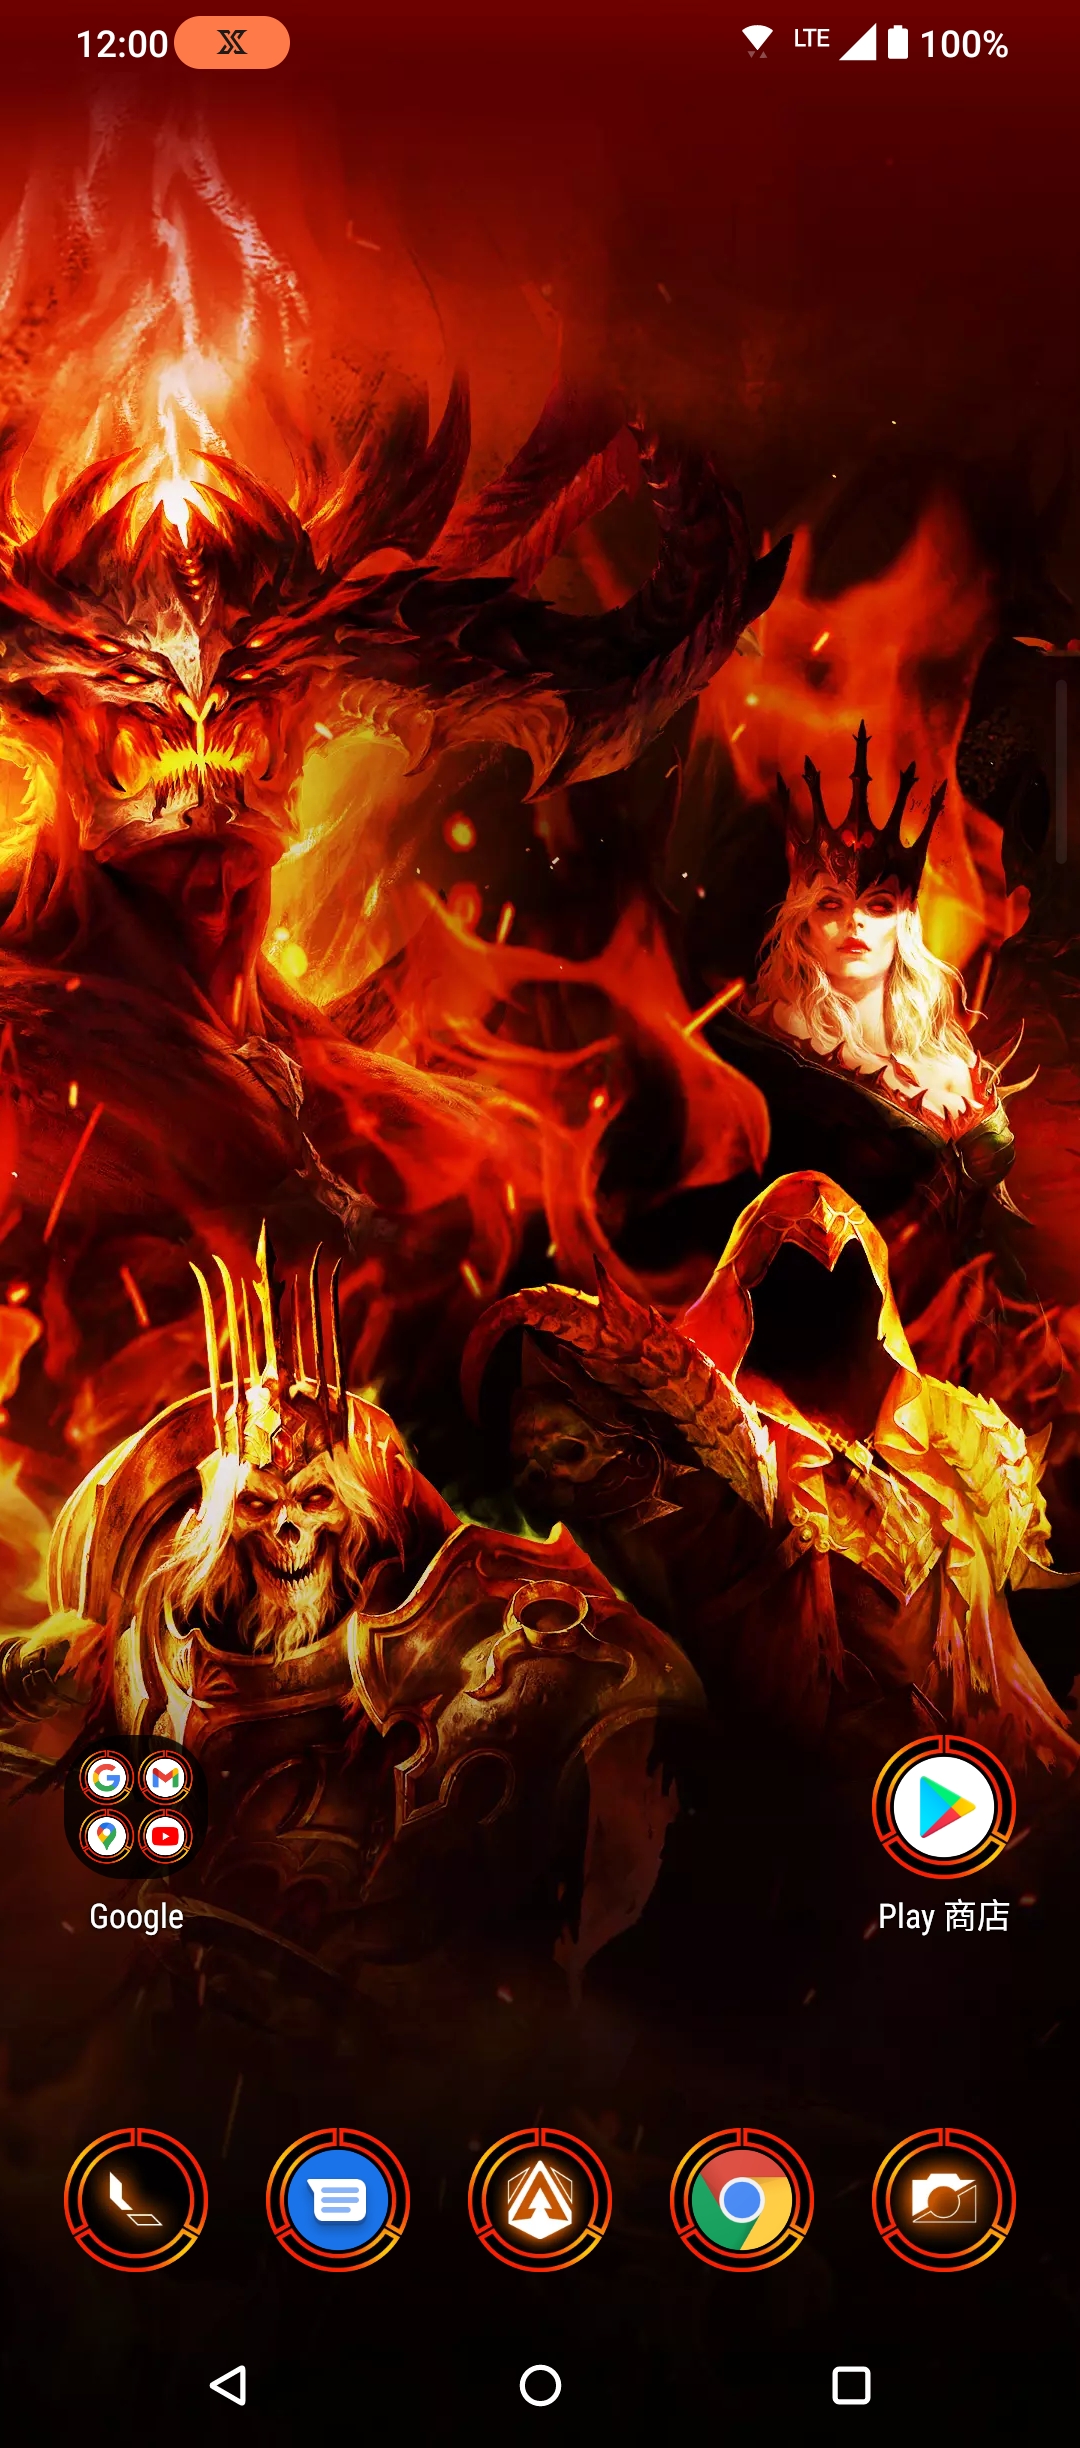 ASUS ROG Phone 6 Diablo Immortal Edition 暗黑破換神 永生不朽版